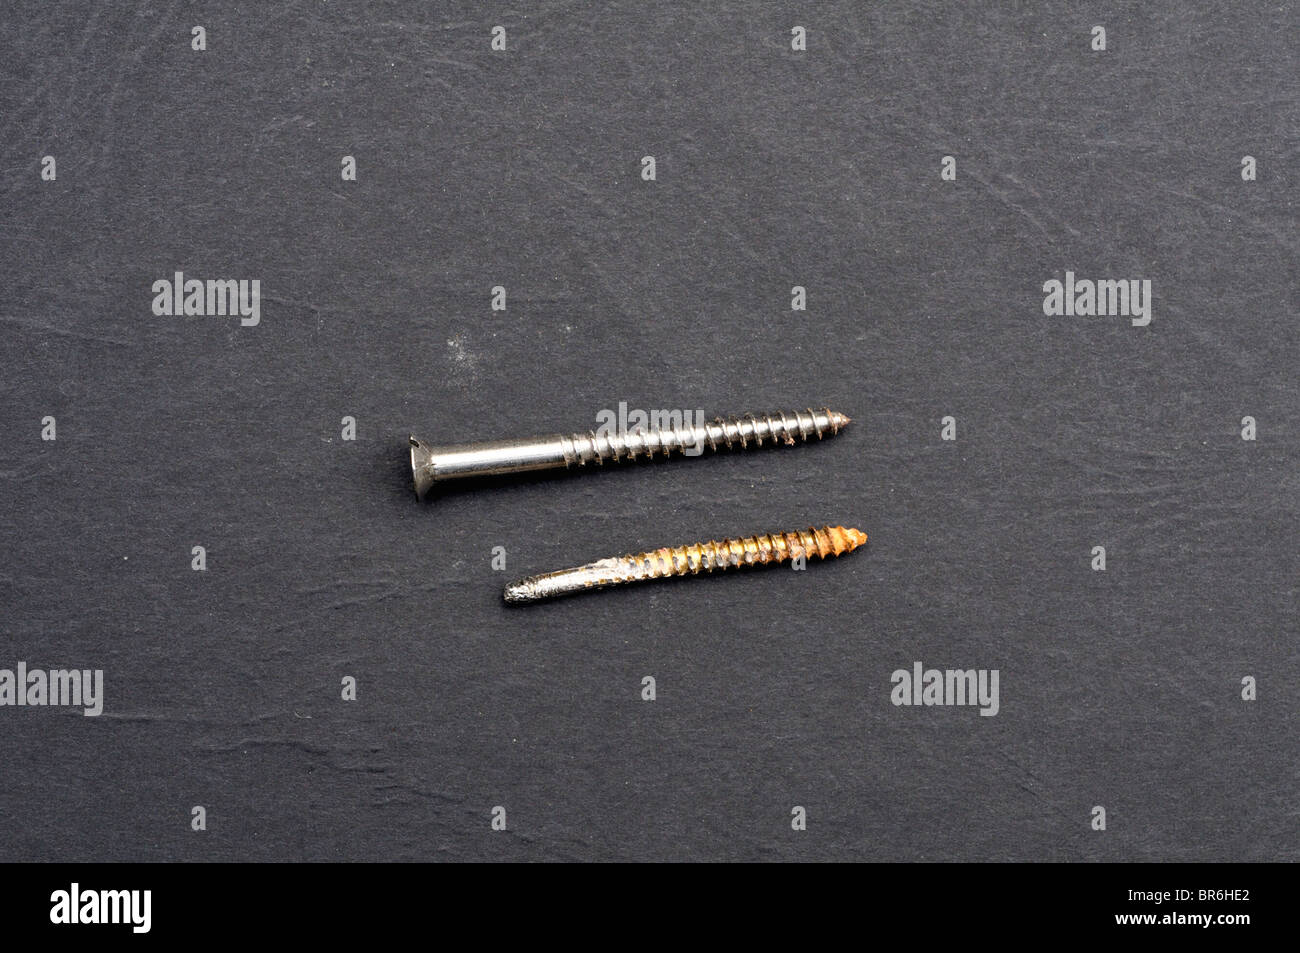 Broken screw compared to an unbroken screw. Stock Photo